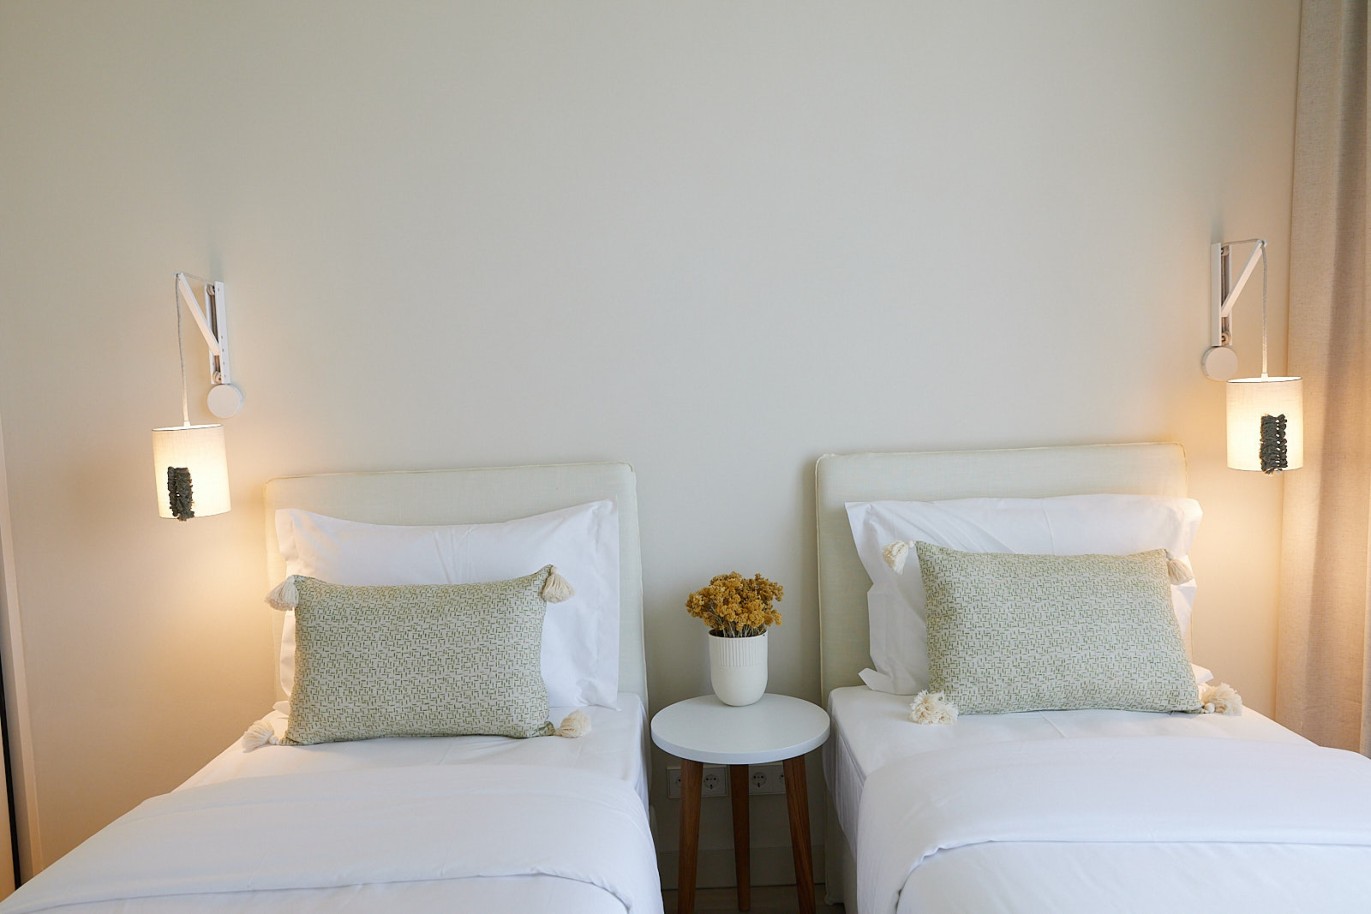 1 bedroom apartment in resort, for sale in Porches, Algarve_228998